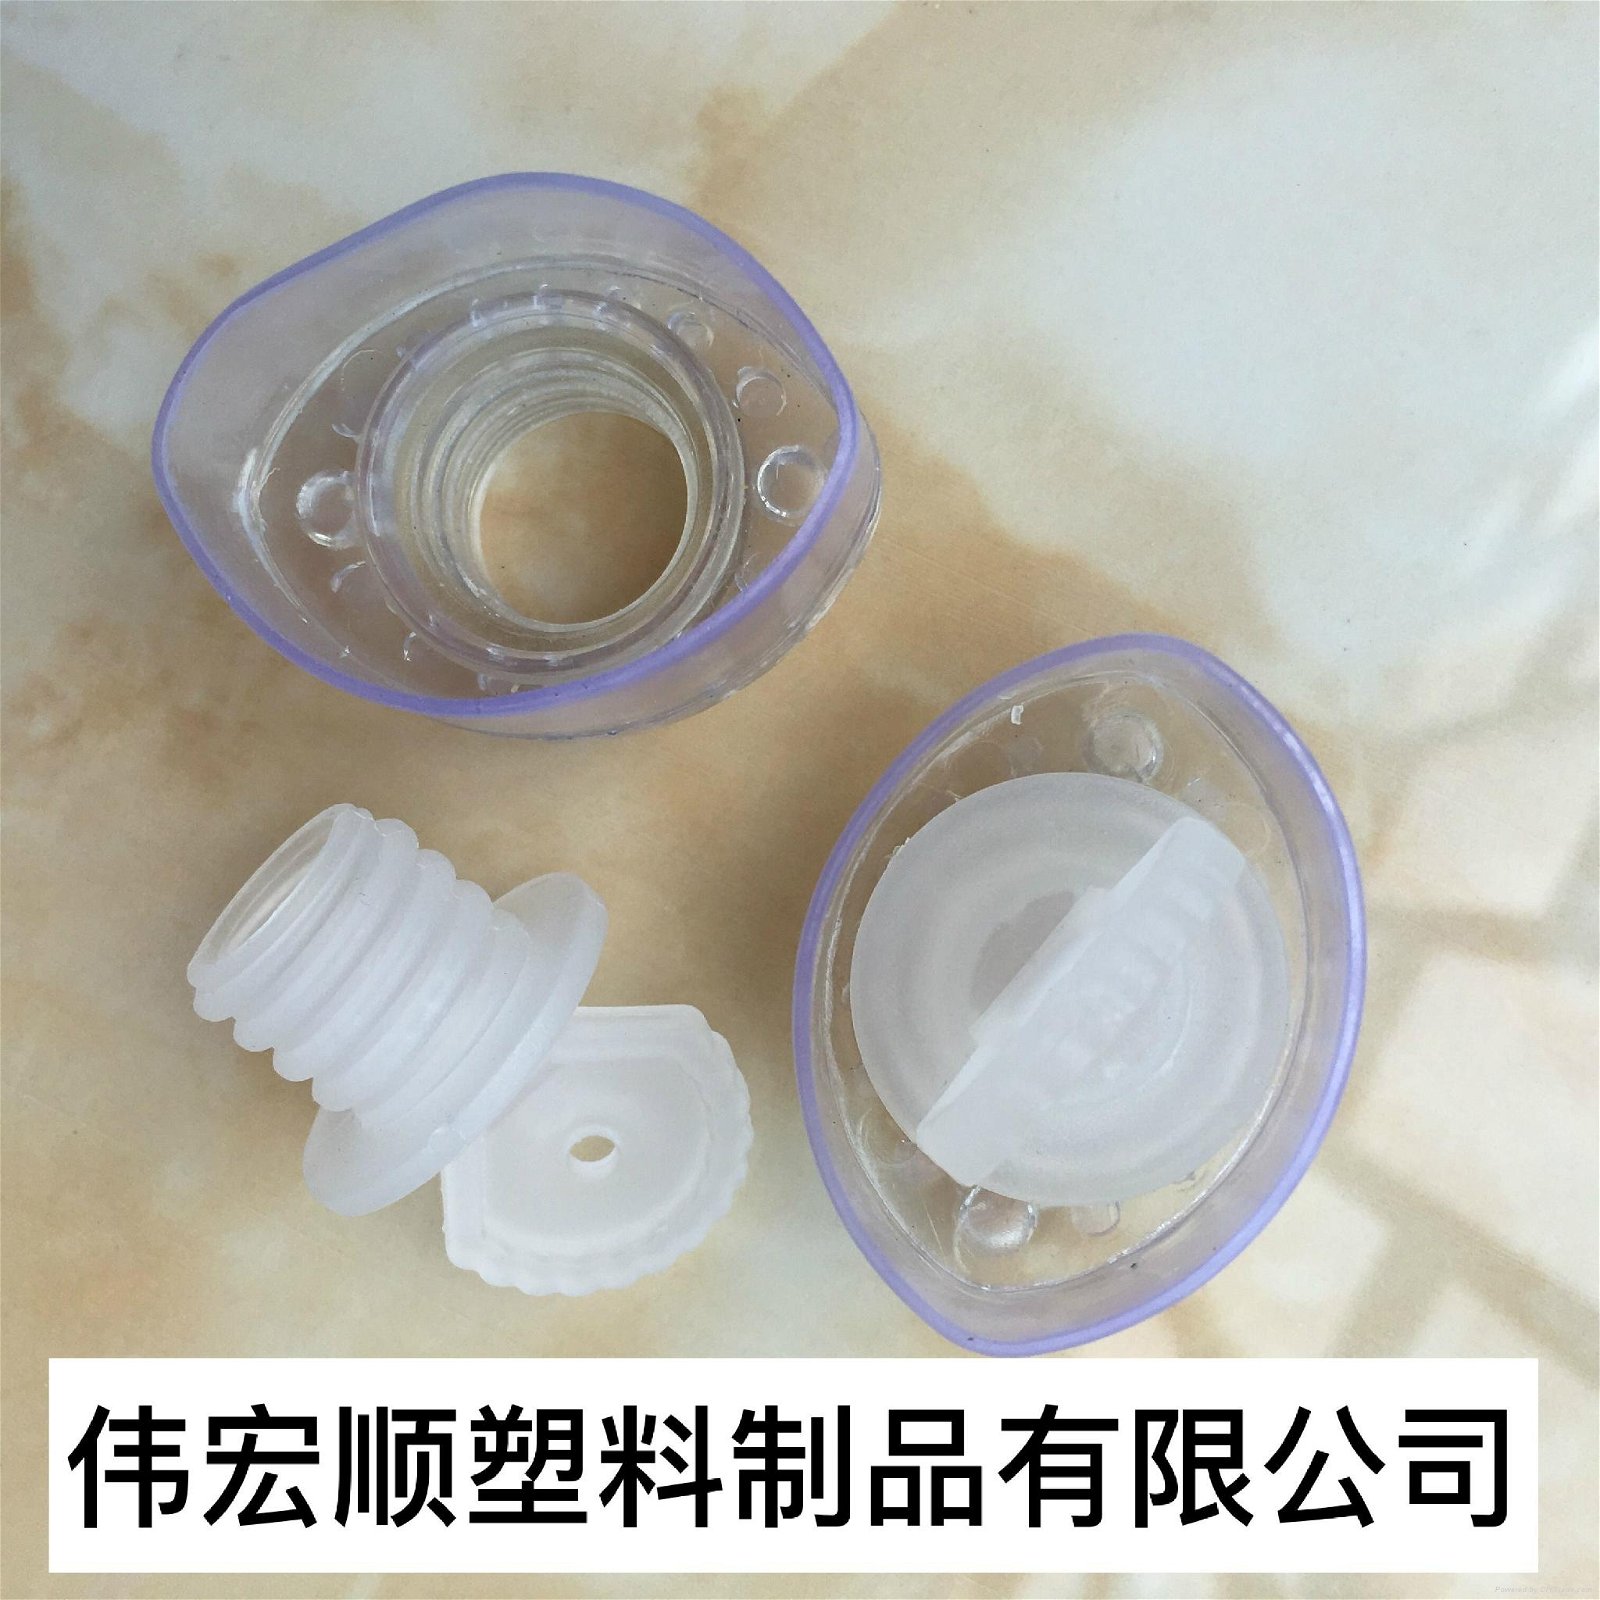 PVC water bottle mouth 5